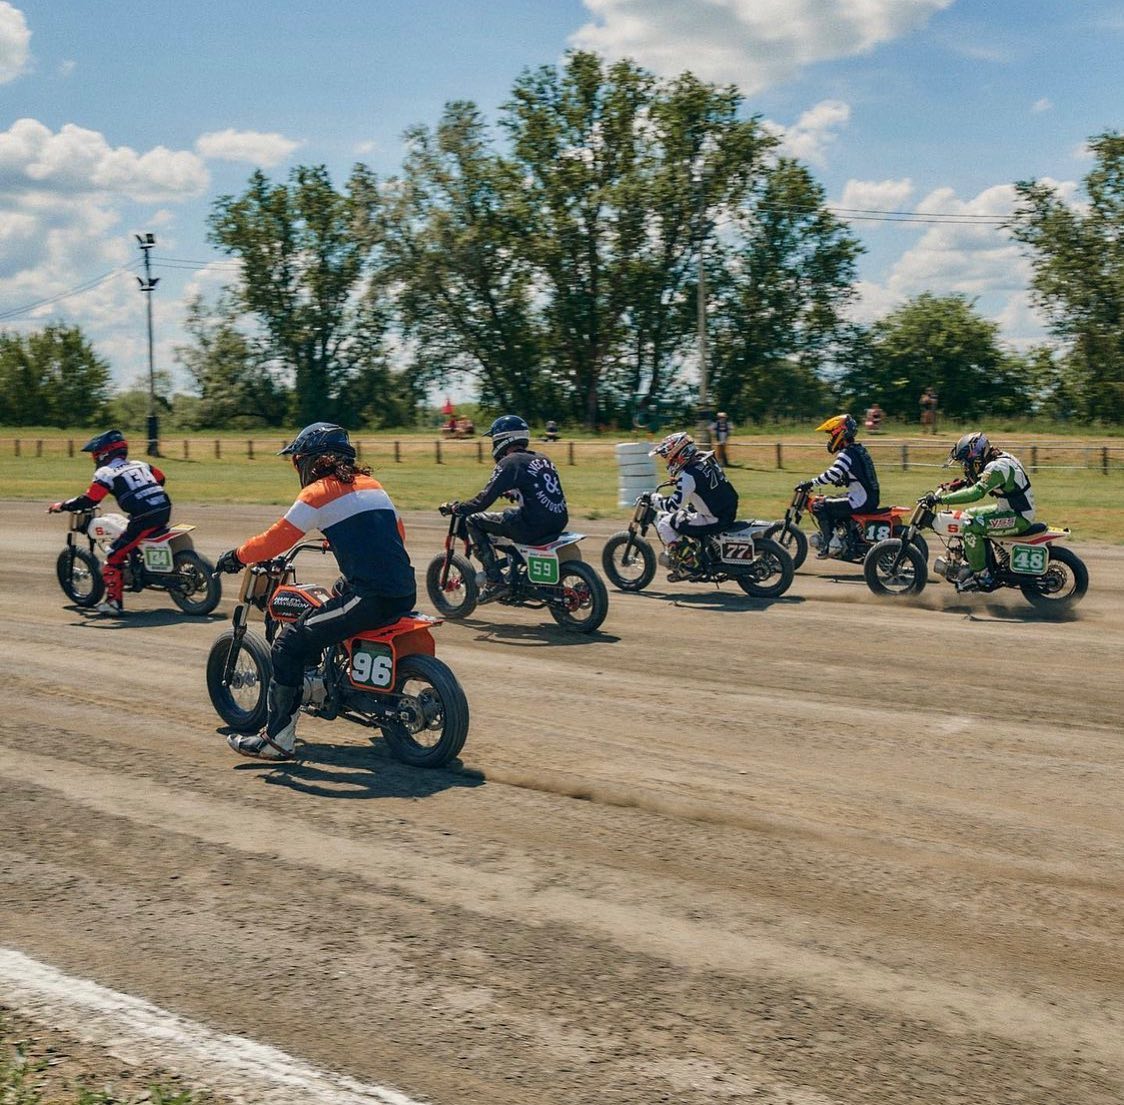 Photo taken during the french flattrack championship ! ✊️
Thanks @france_flat_track @clementlazzaro 
—
#sundaymotors #flattrack #moto #motorcycle #ycf